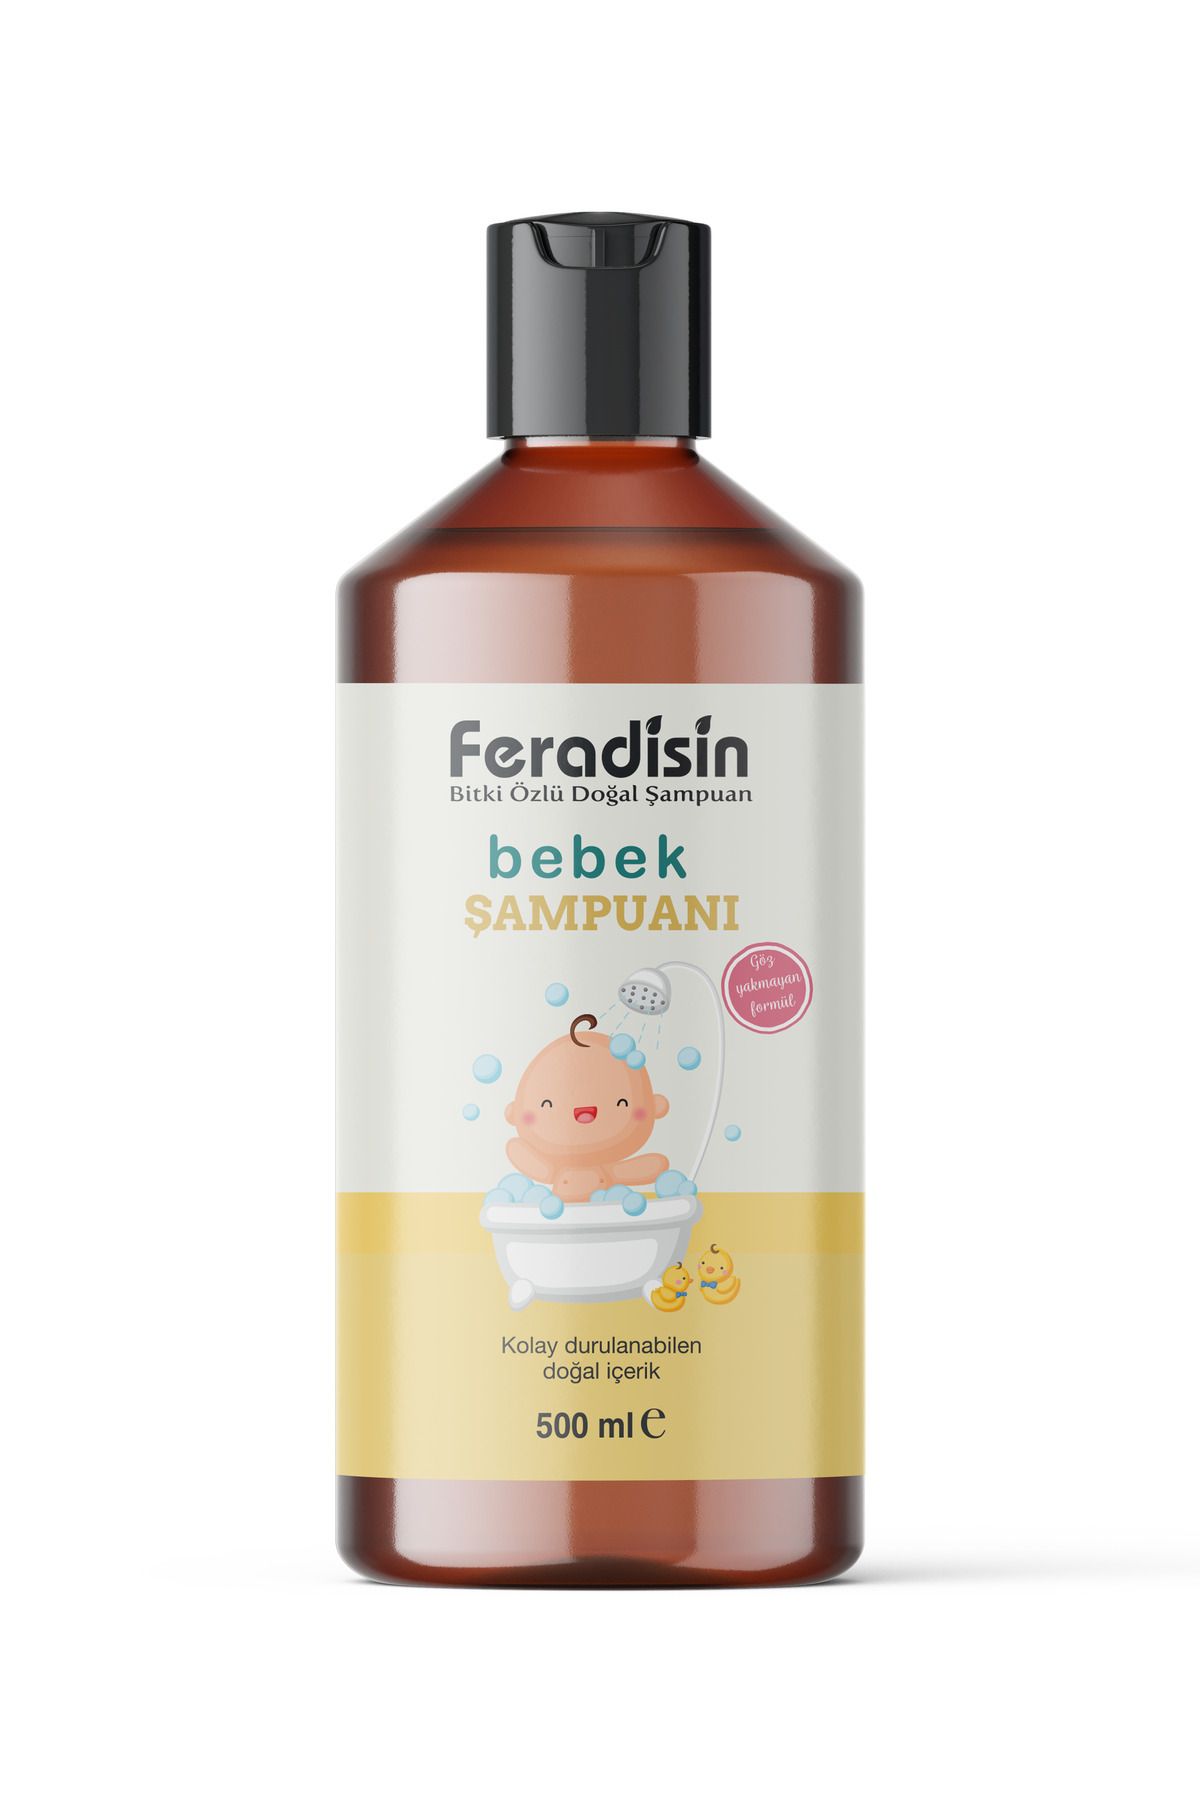 Feradisin Bebek Şampuanı 500 Ml. Gimdes Helal Sertifikalı